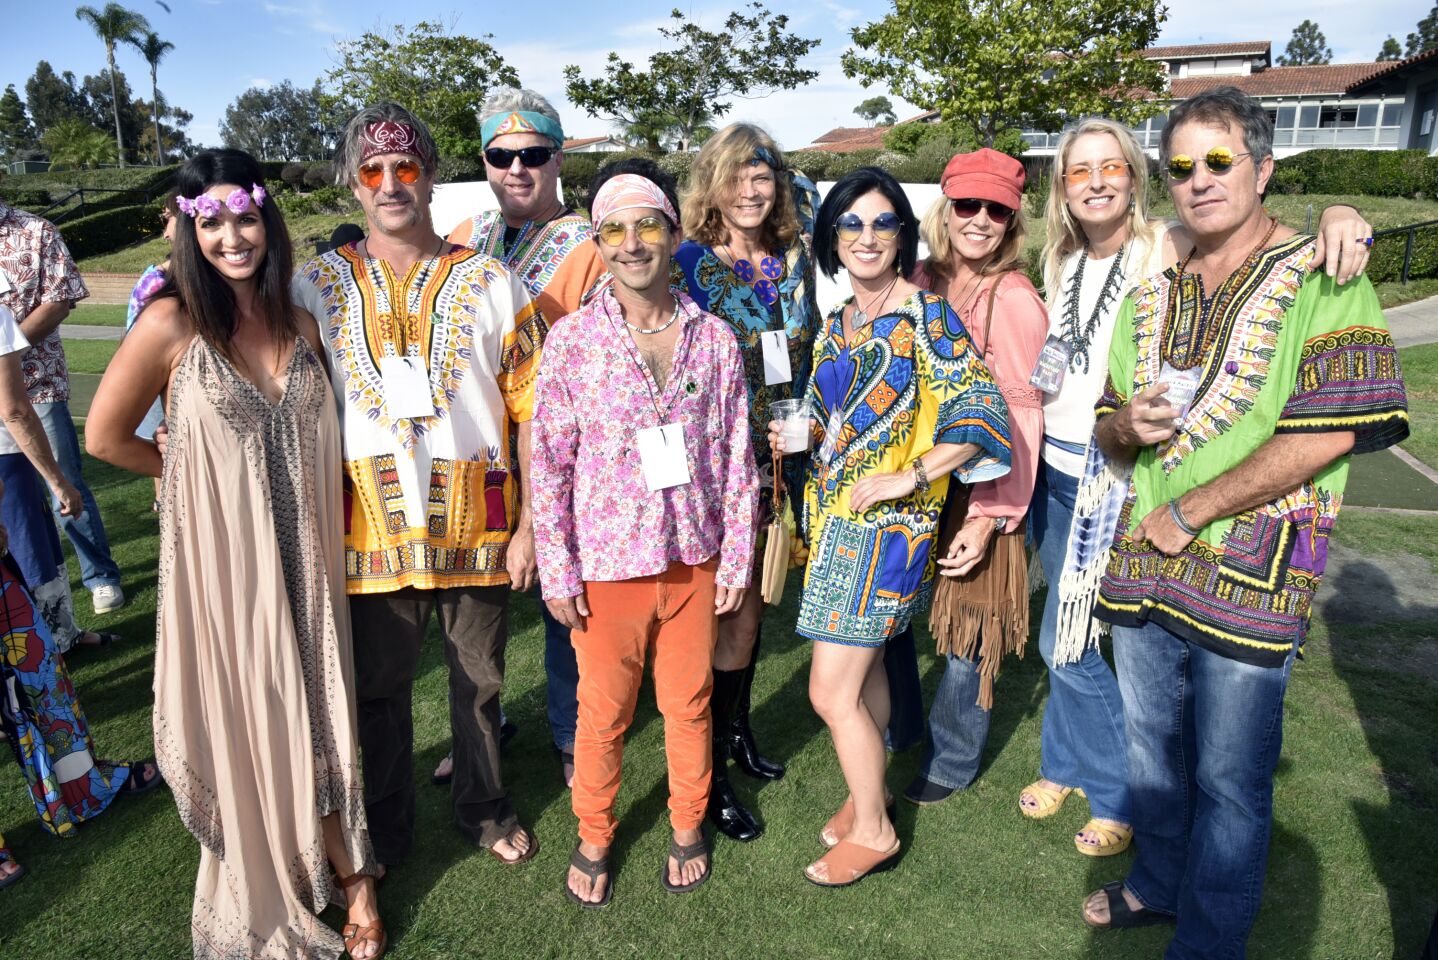 More “Woodstock” attendees